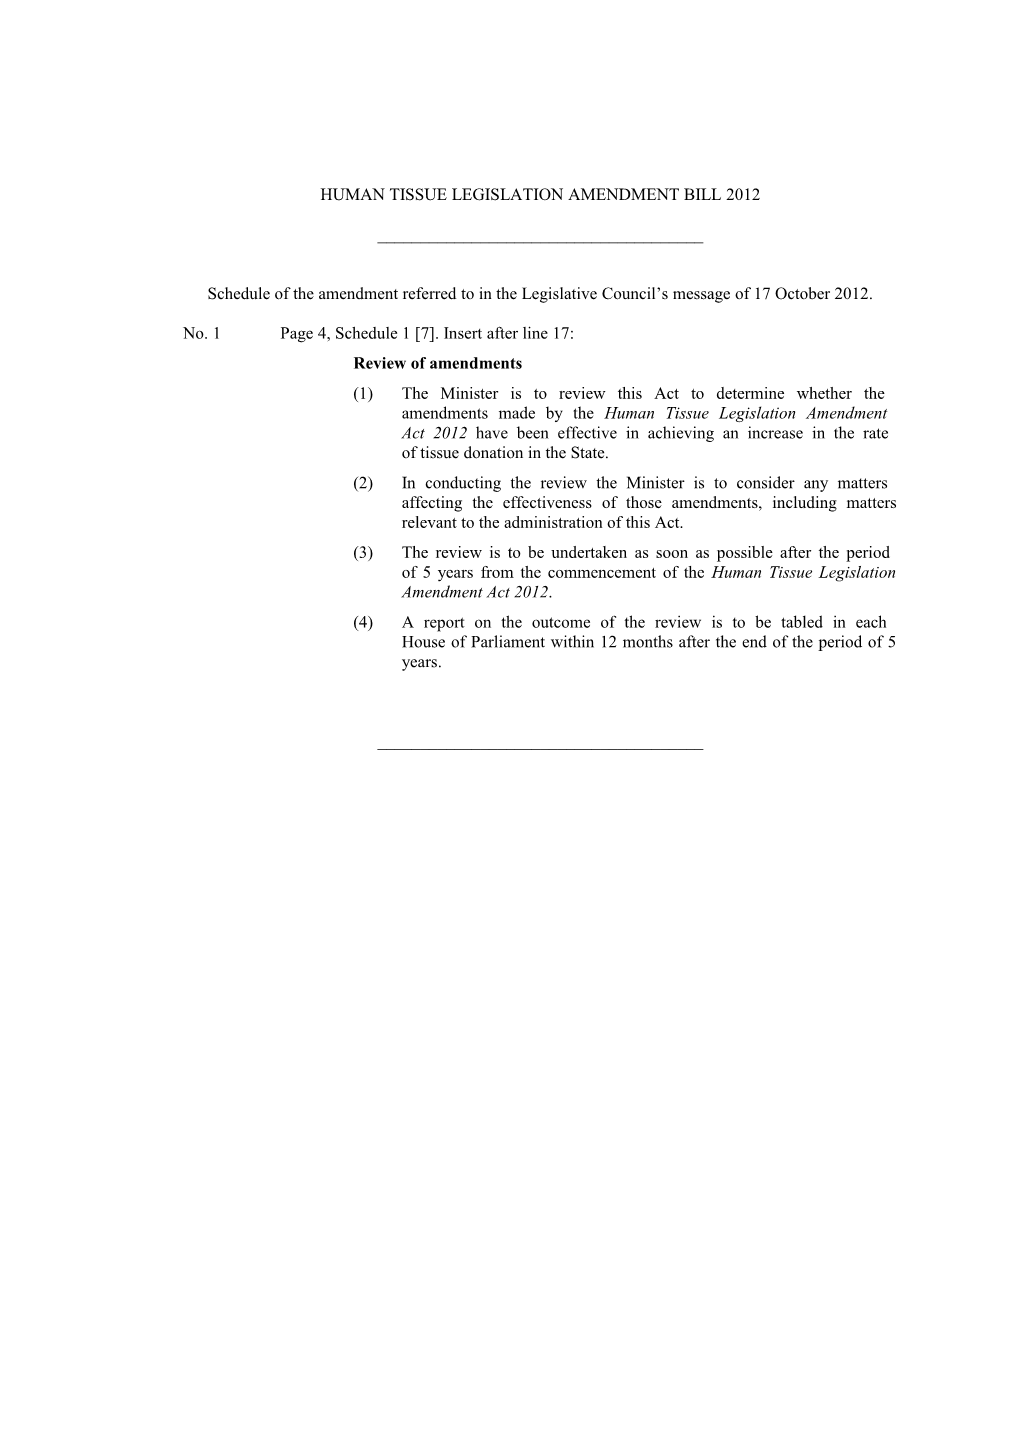 Schedule - Human Tissue Legislation Amendment Bill 2012